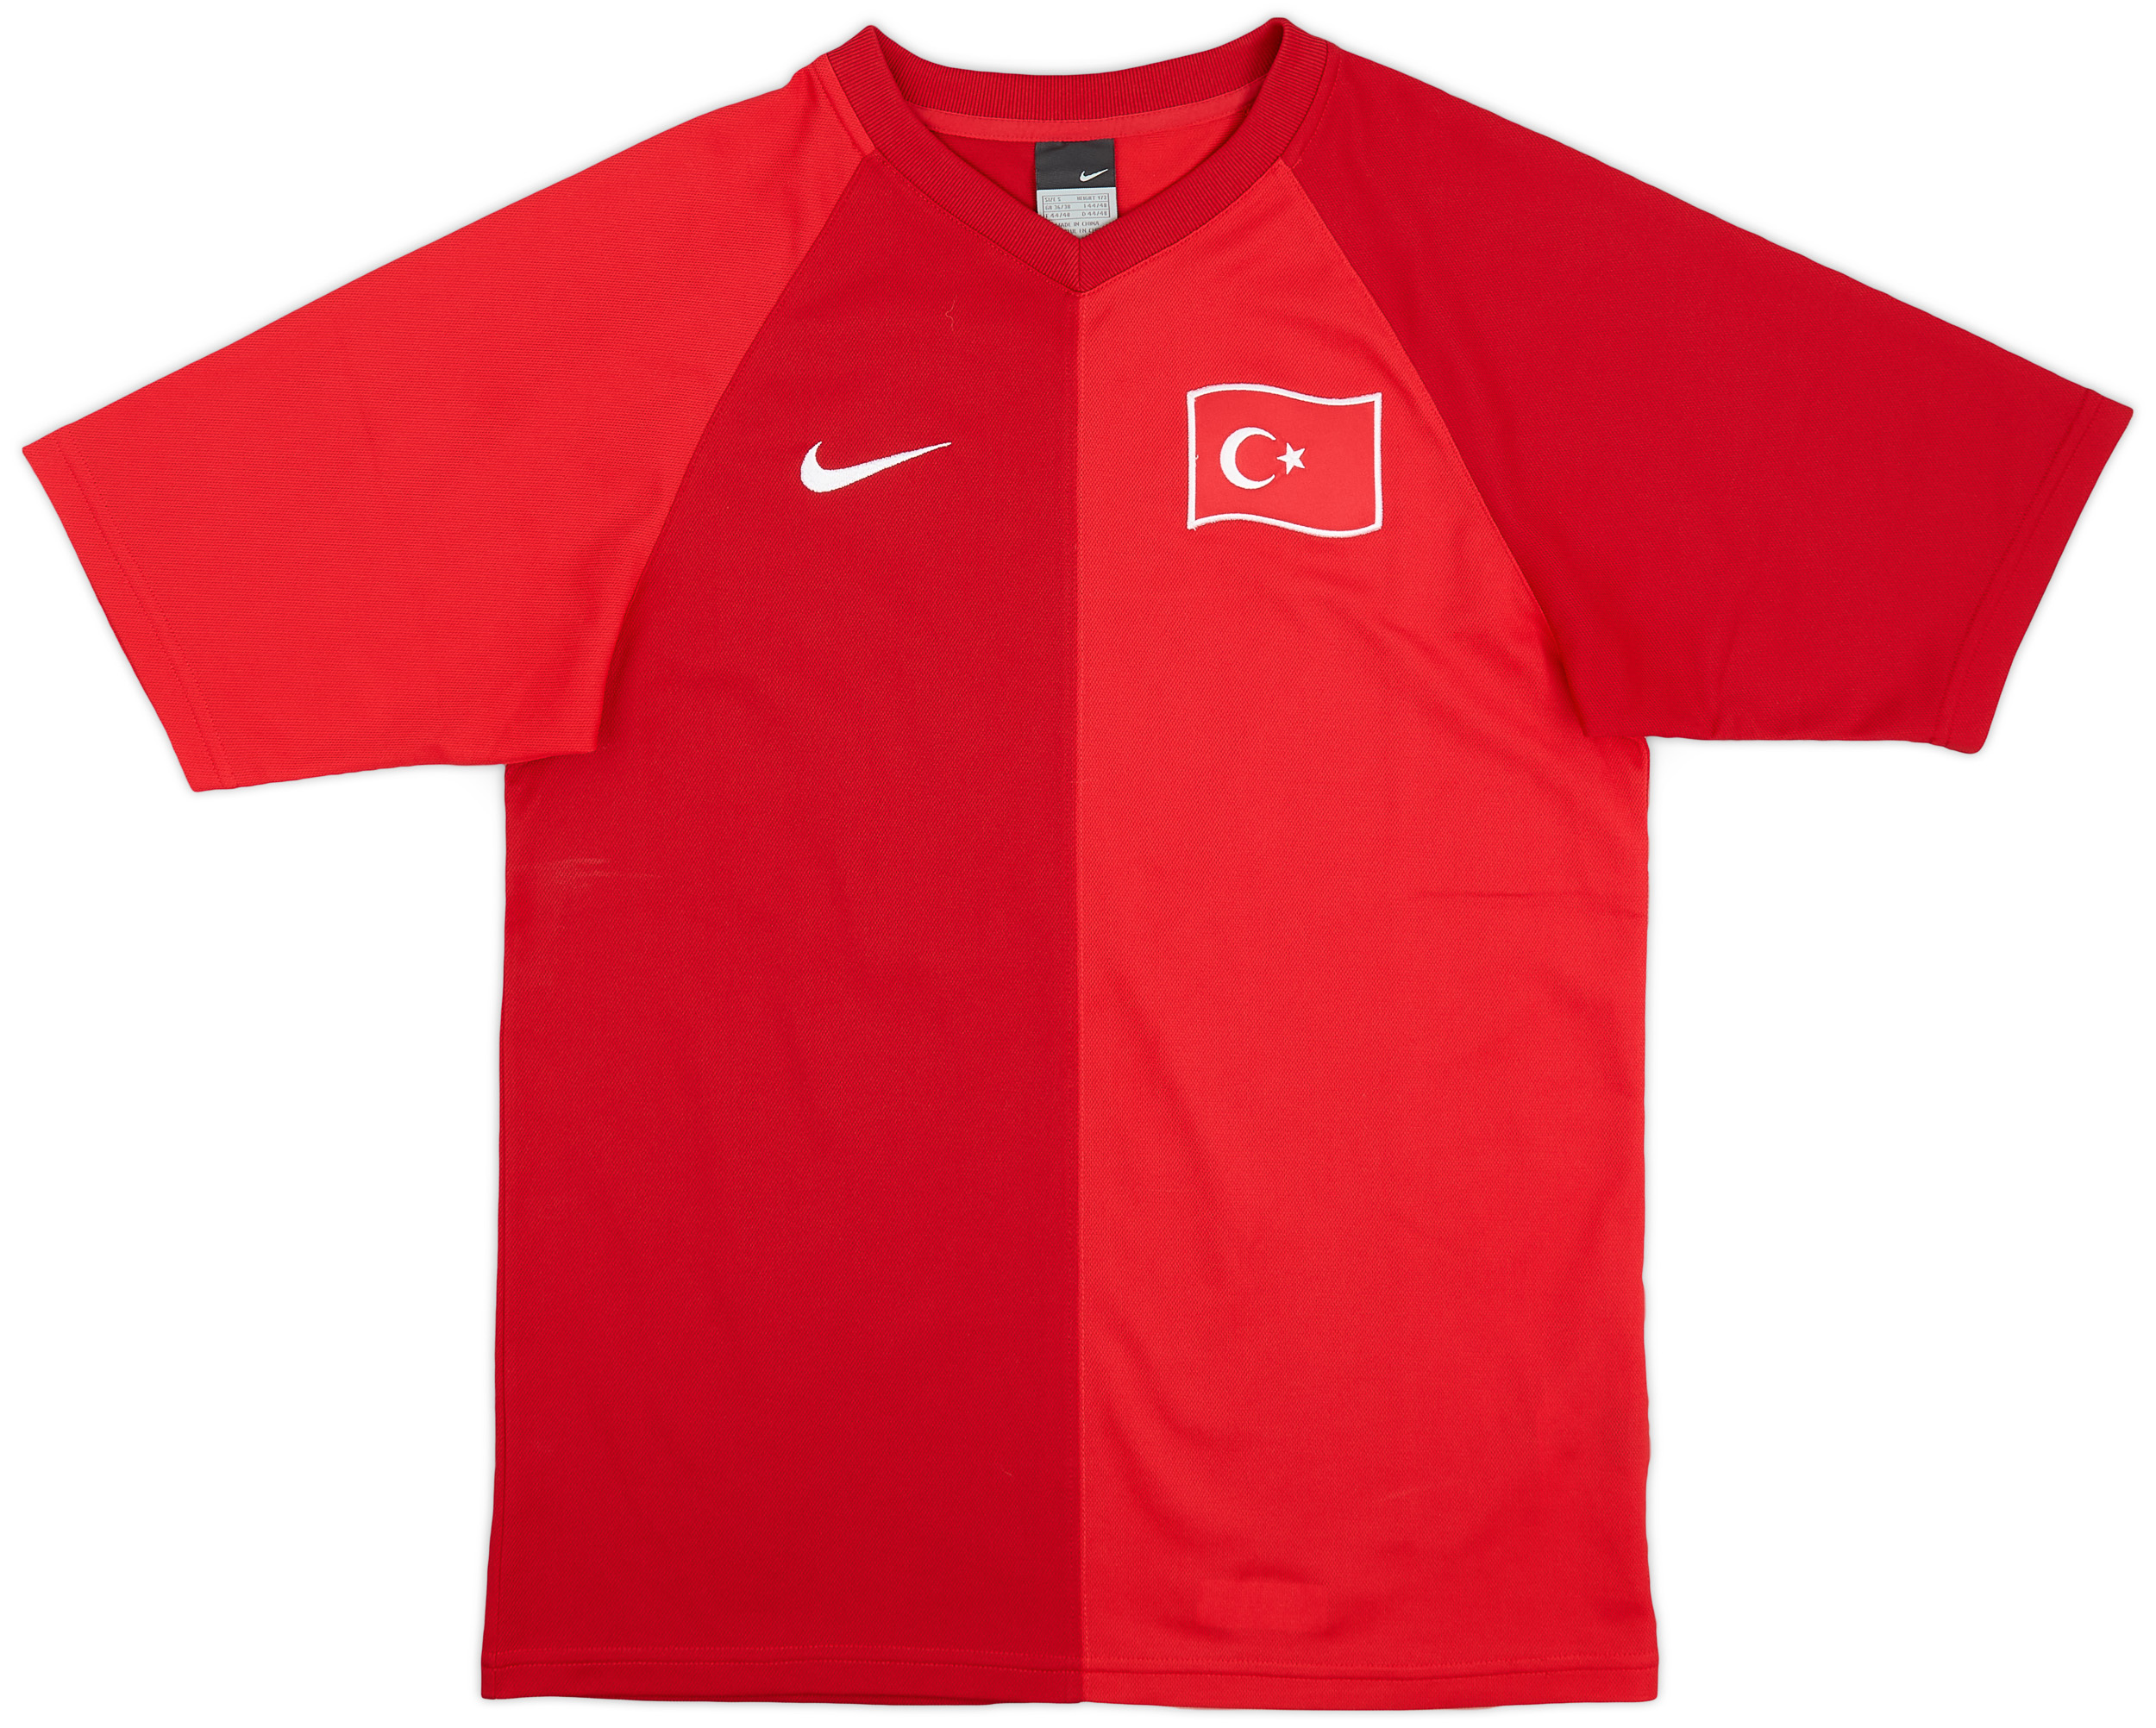 Retro Turkey Shirt